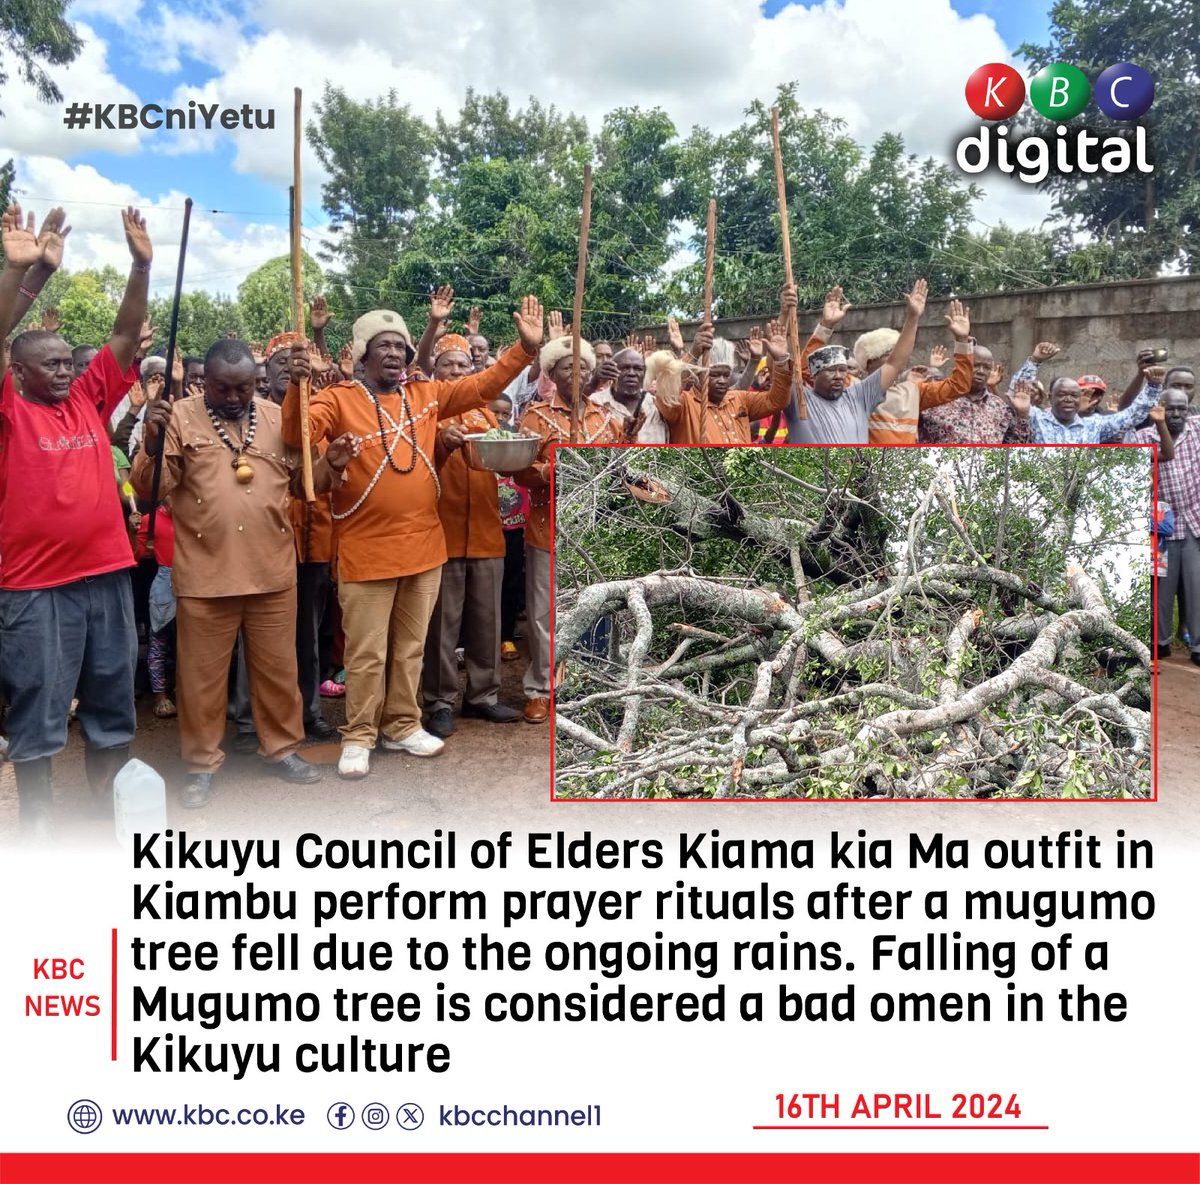 Kikuyu Council of Elders Kiama kia Ma outfit in Kiambu perform prayer rituals after a mugumo tree fell due to the ongoing rains. Falling of a Mugumo tree is considered a bad omen in the Kikuyu culture. #KBCniYetu